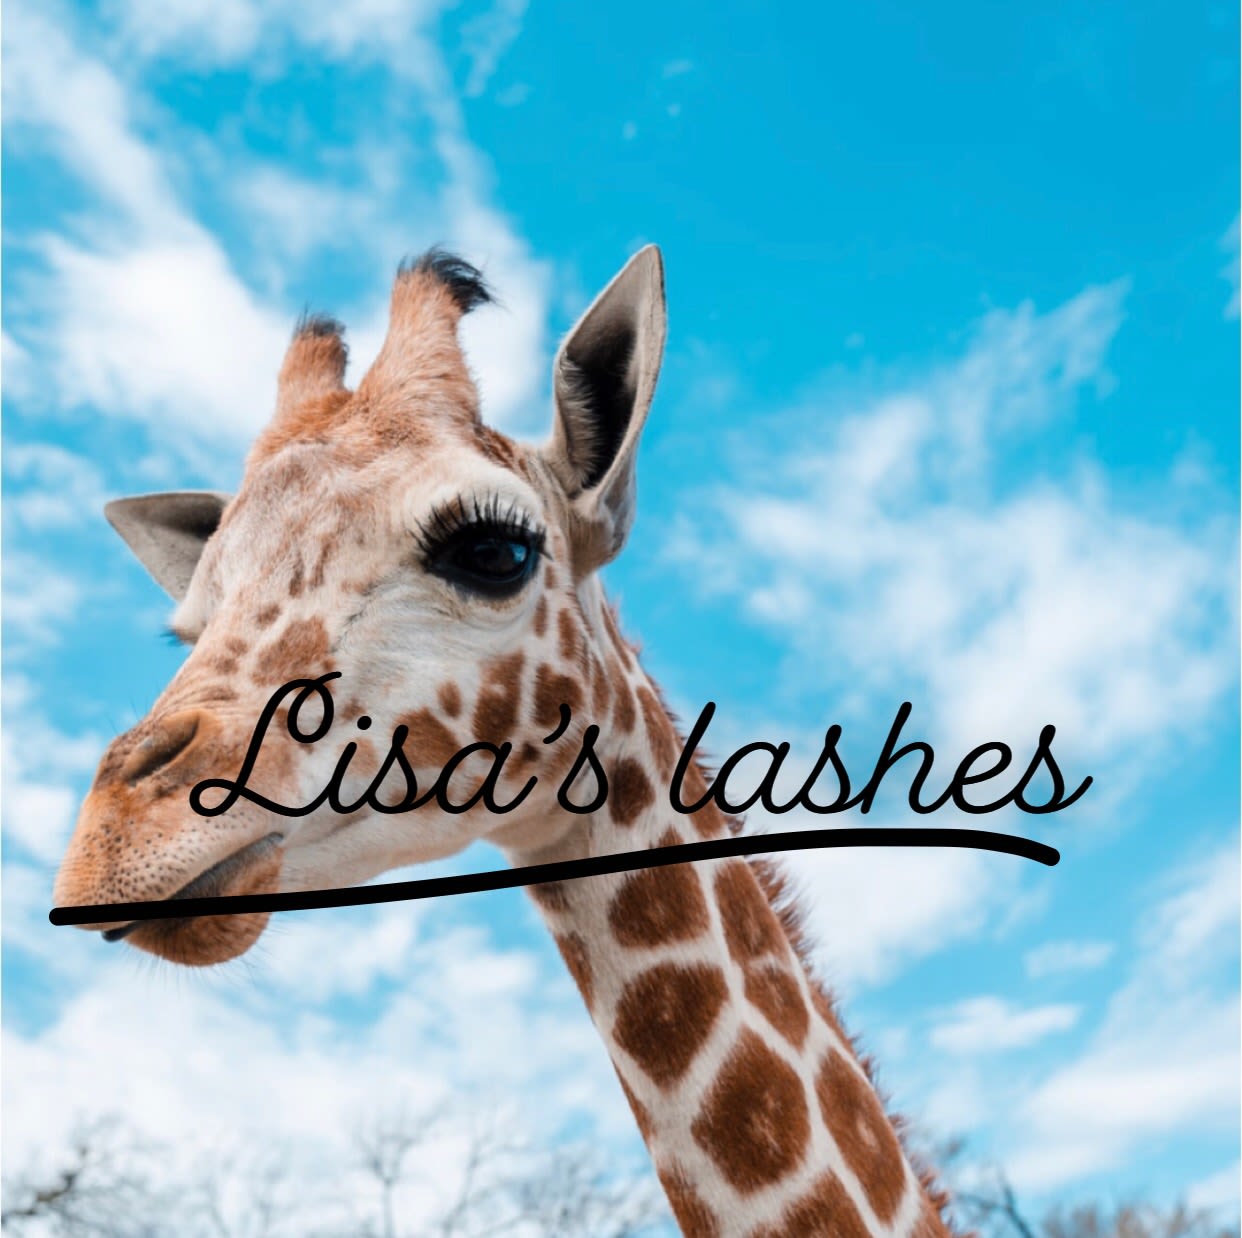 Lisa’s lashes